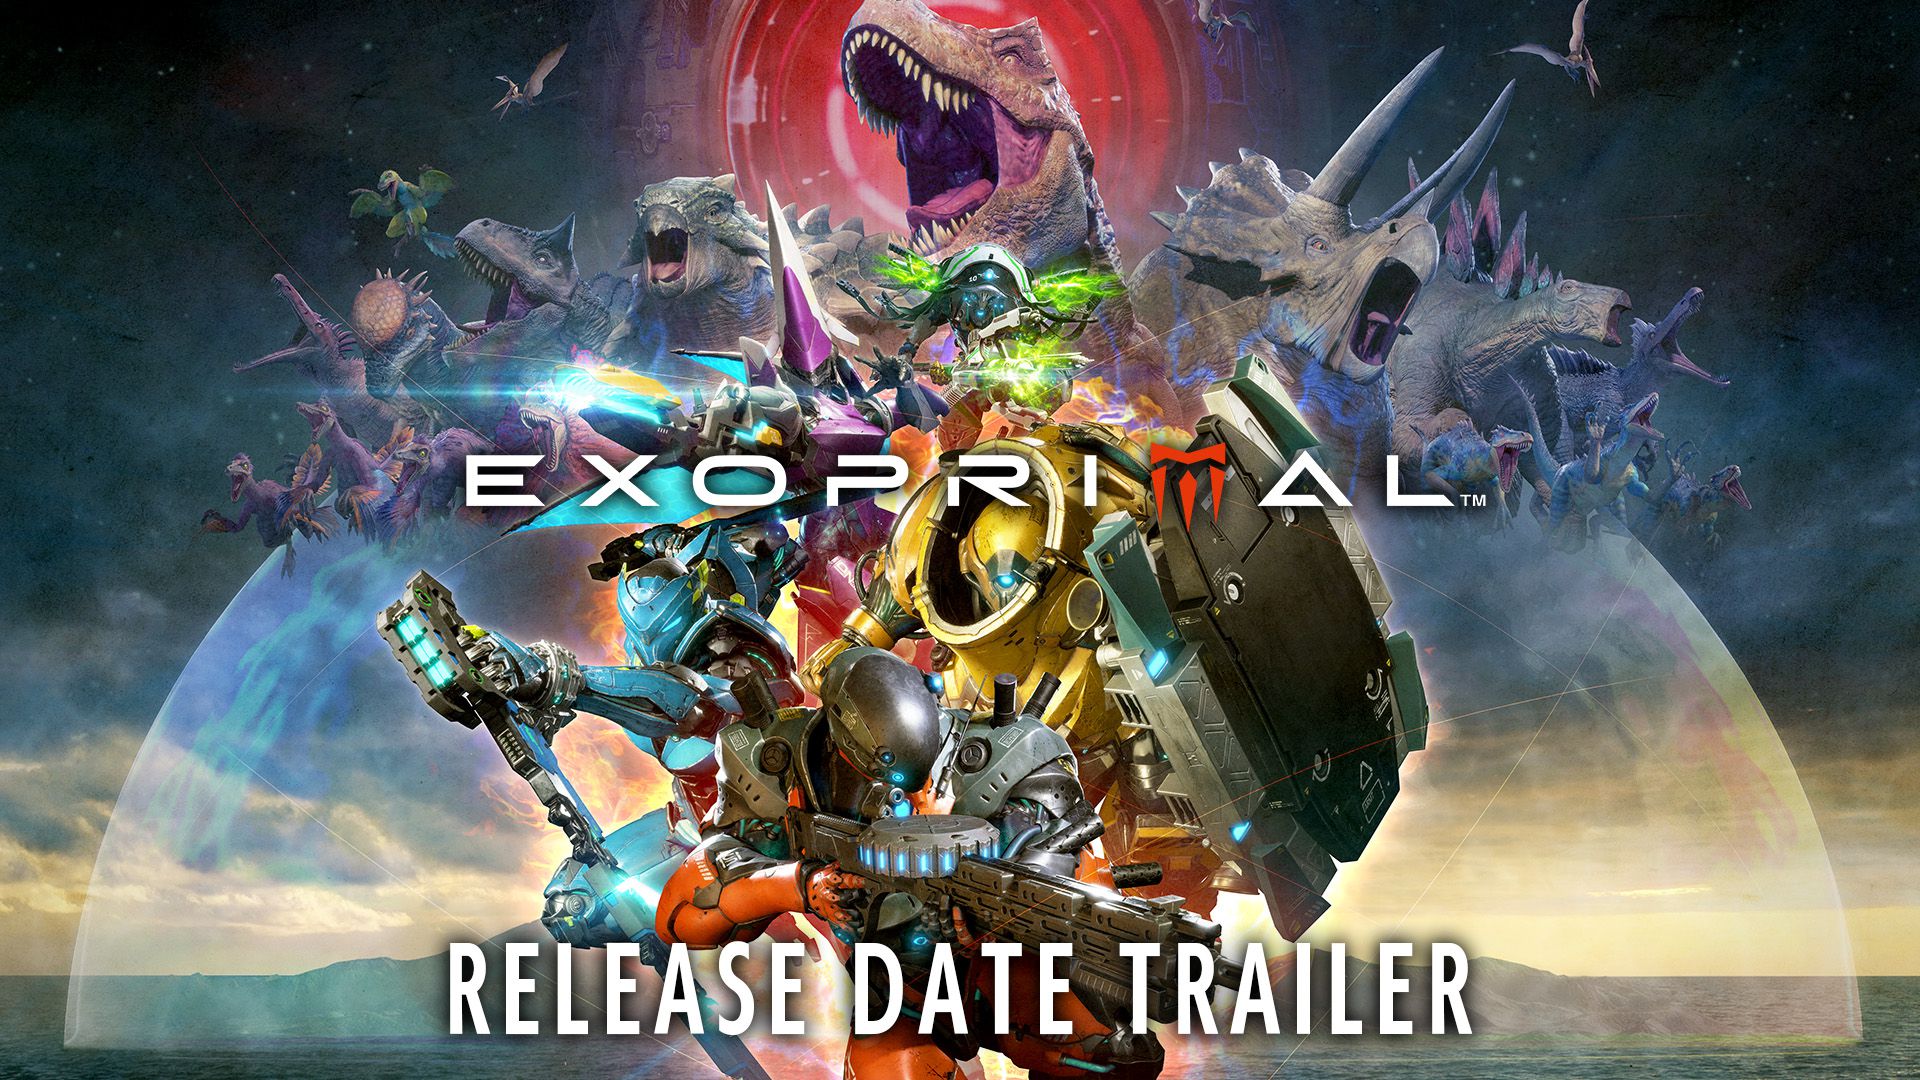 Release Date Trailer